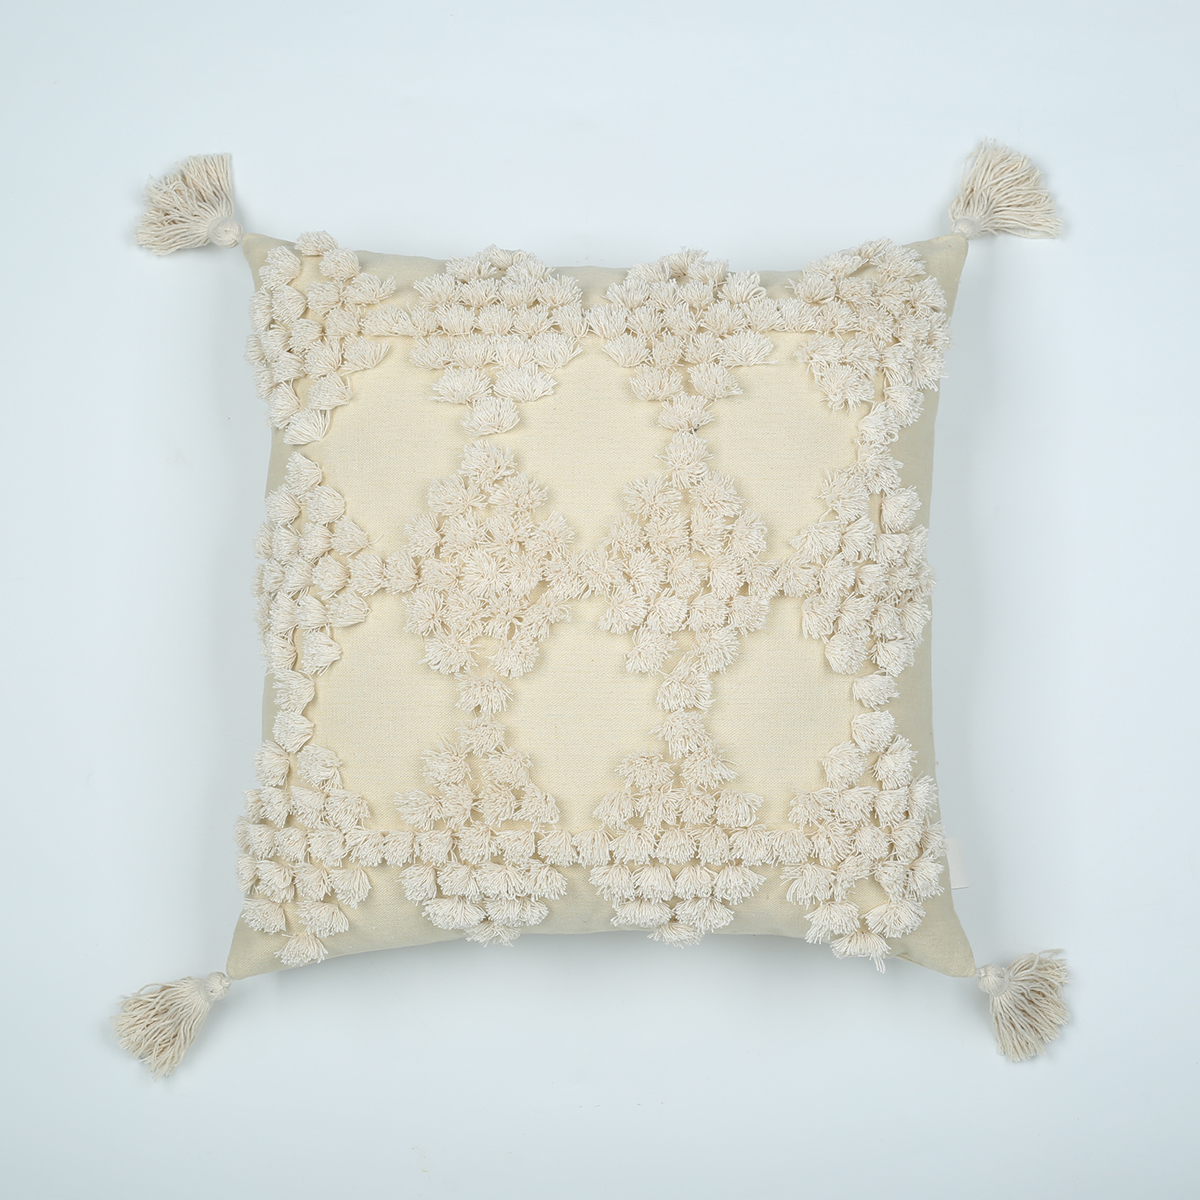 Tufted Embroidery Boho Home Luxury Cushion Cover Decorative Ruffled Sofa Macrame Pillow Cover